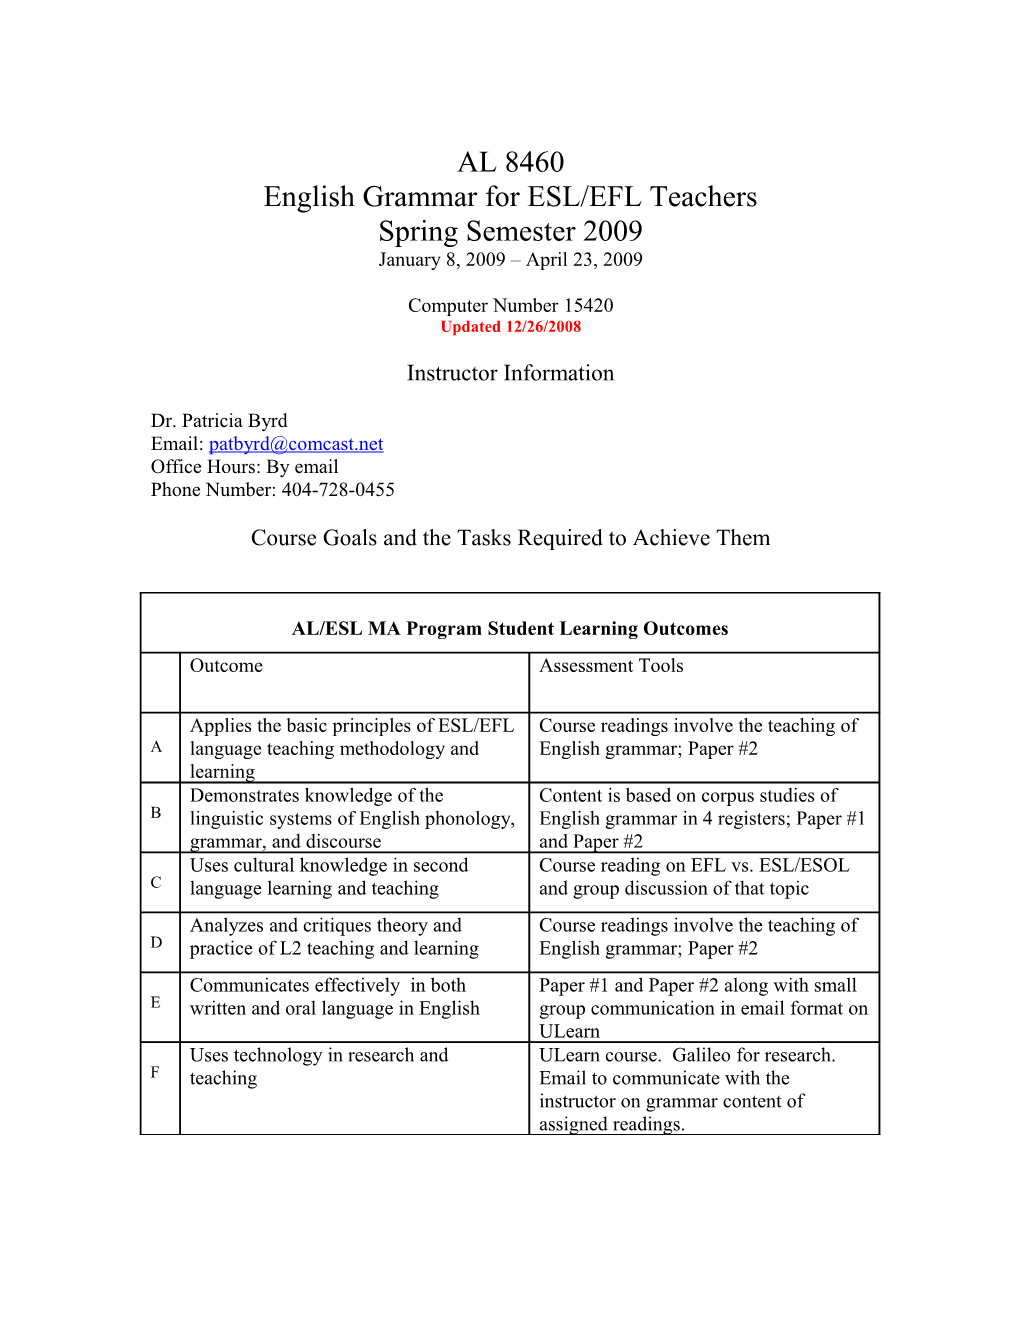 English Grammar Foresl/EFL Teachers